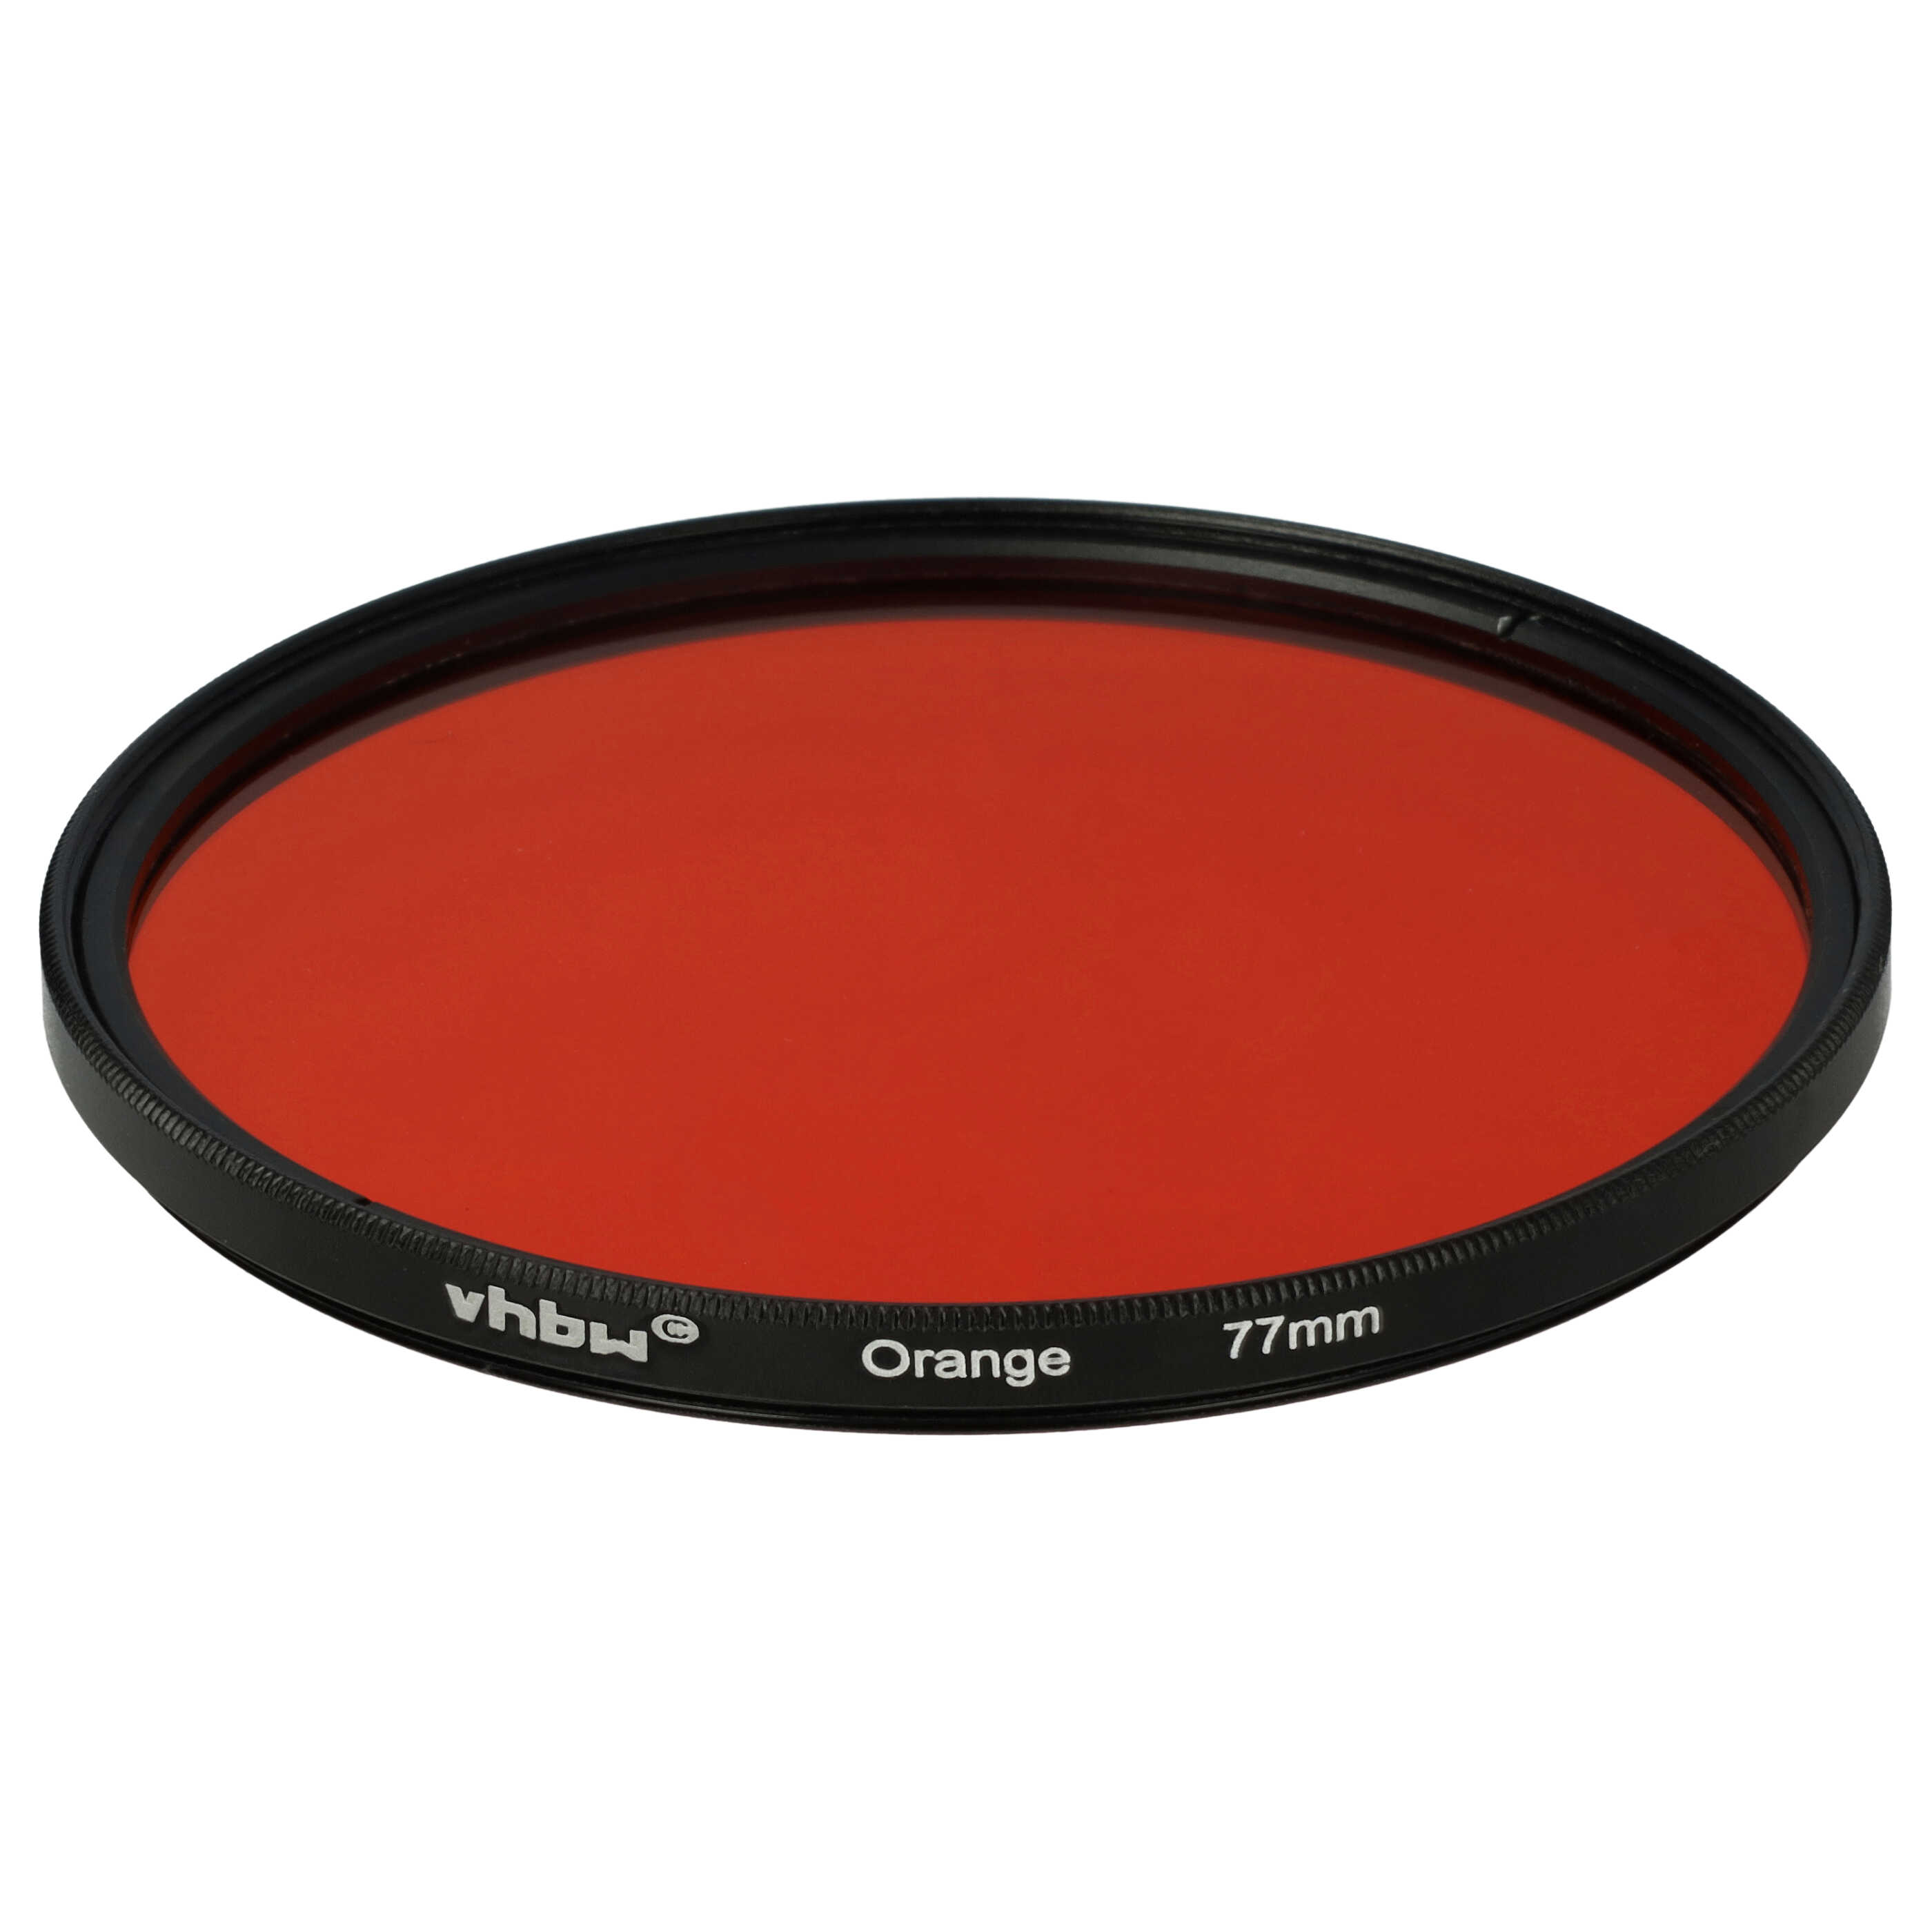 Coloured Filter, Orange suitable for Camera Lenses with 77 mm Filter Thread - Orange Filter